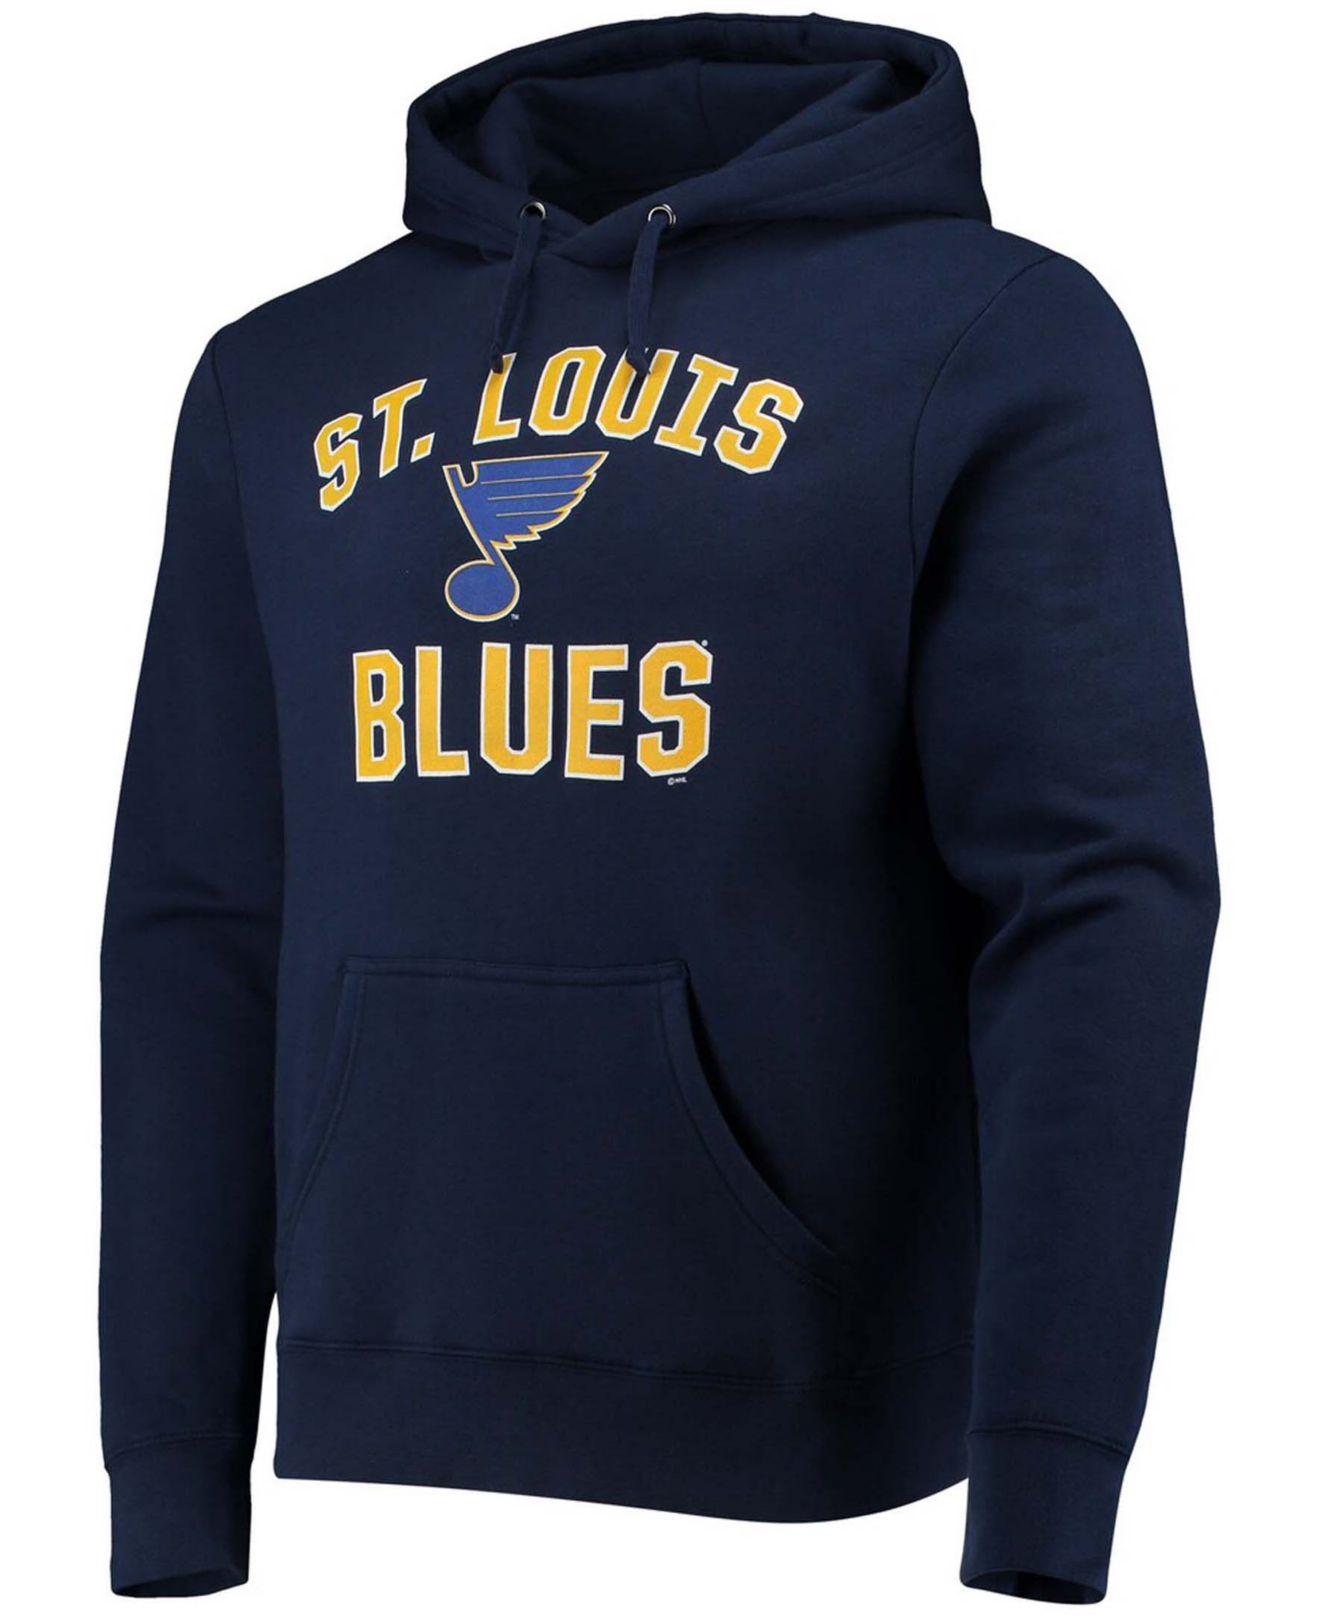 Men's Fanatics Branded Blue St. Louis Blues Big & Tall Pullover Hoodie